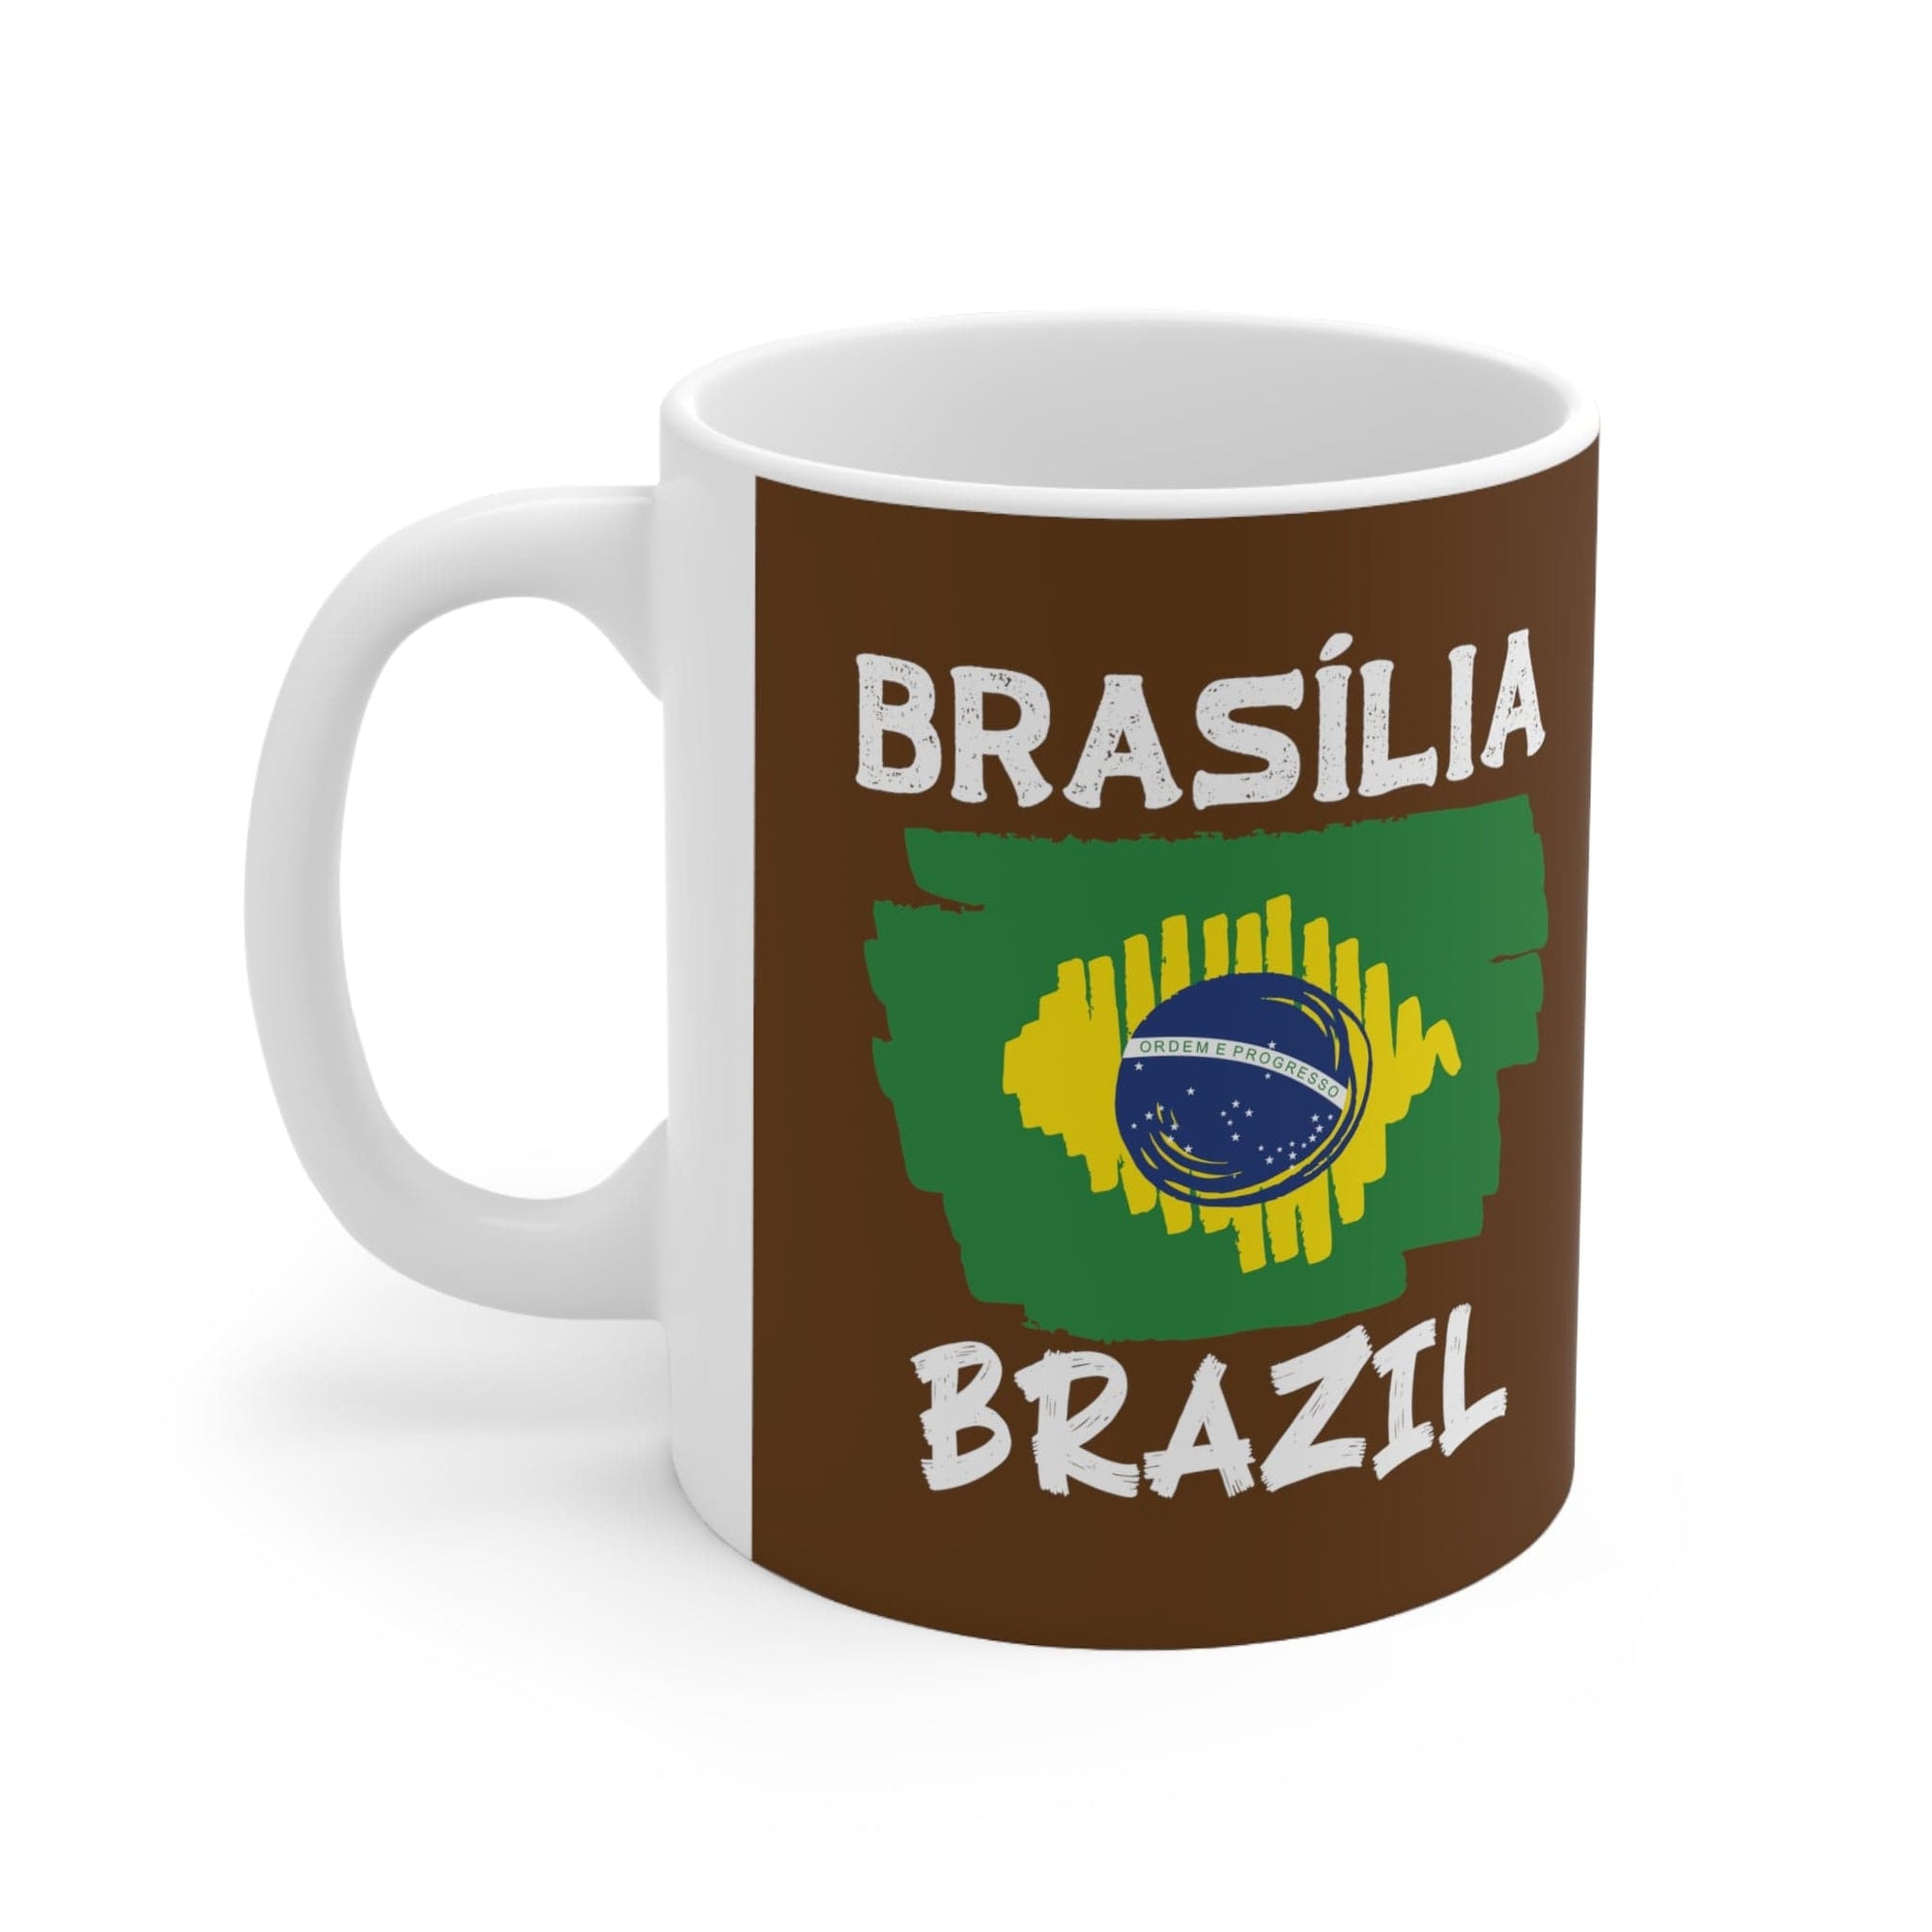 BRASILIA  - Awesome Ceramic Mug, Exclusive Design